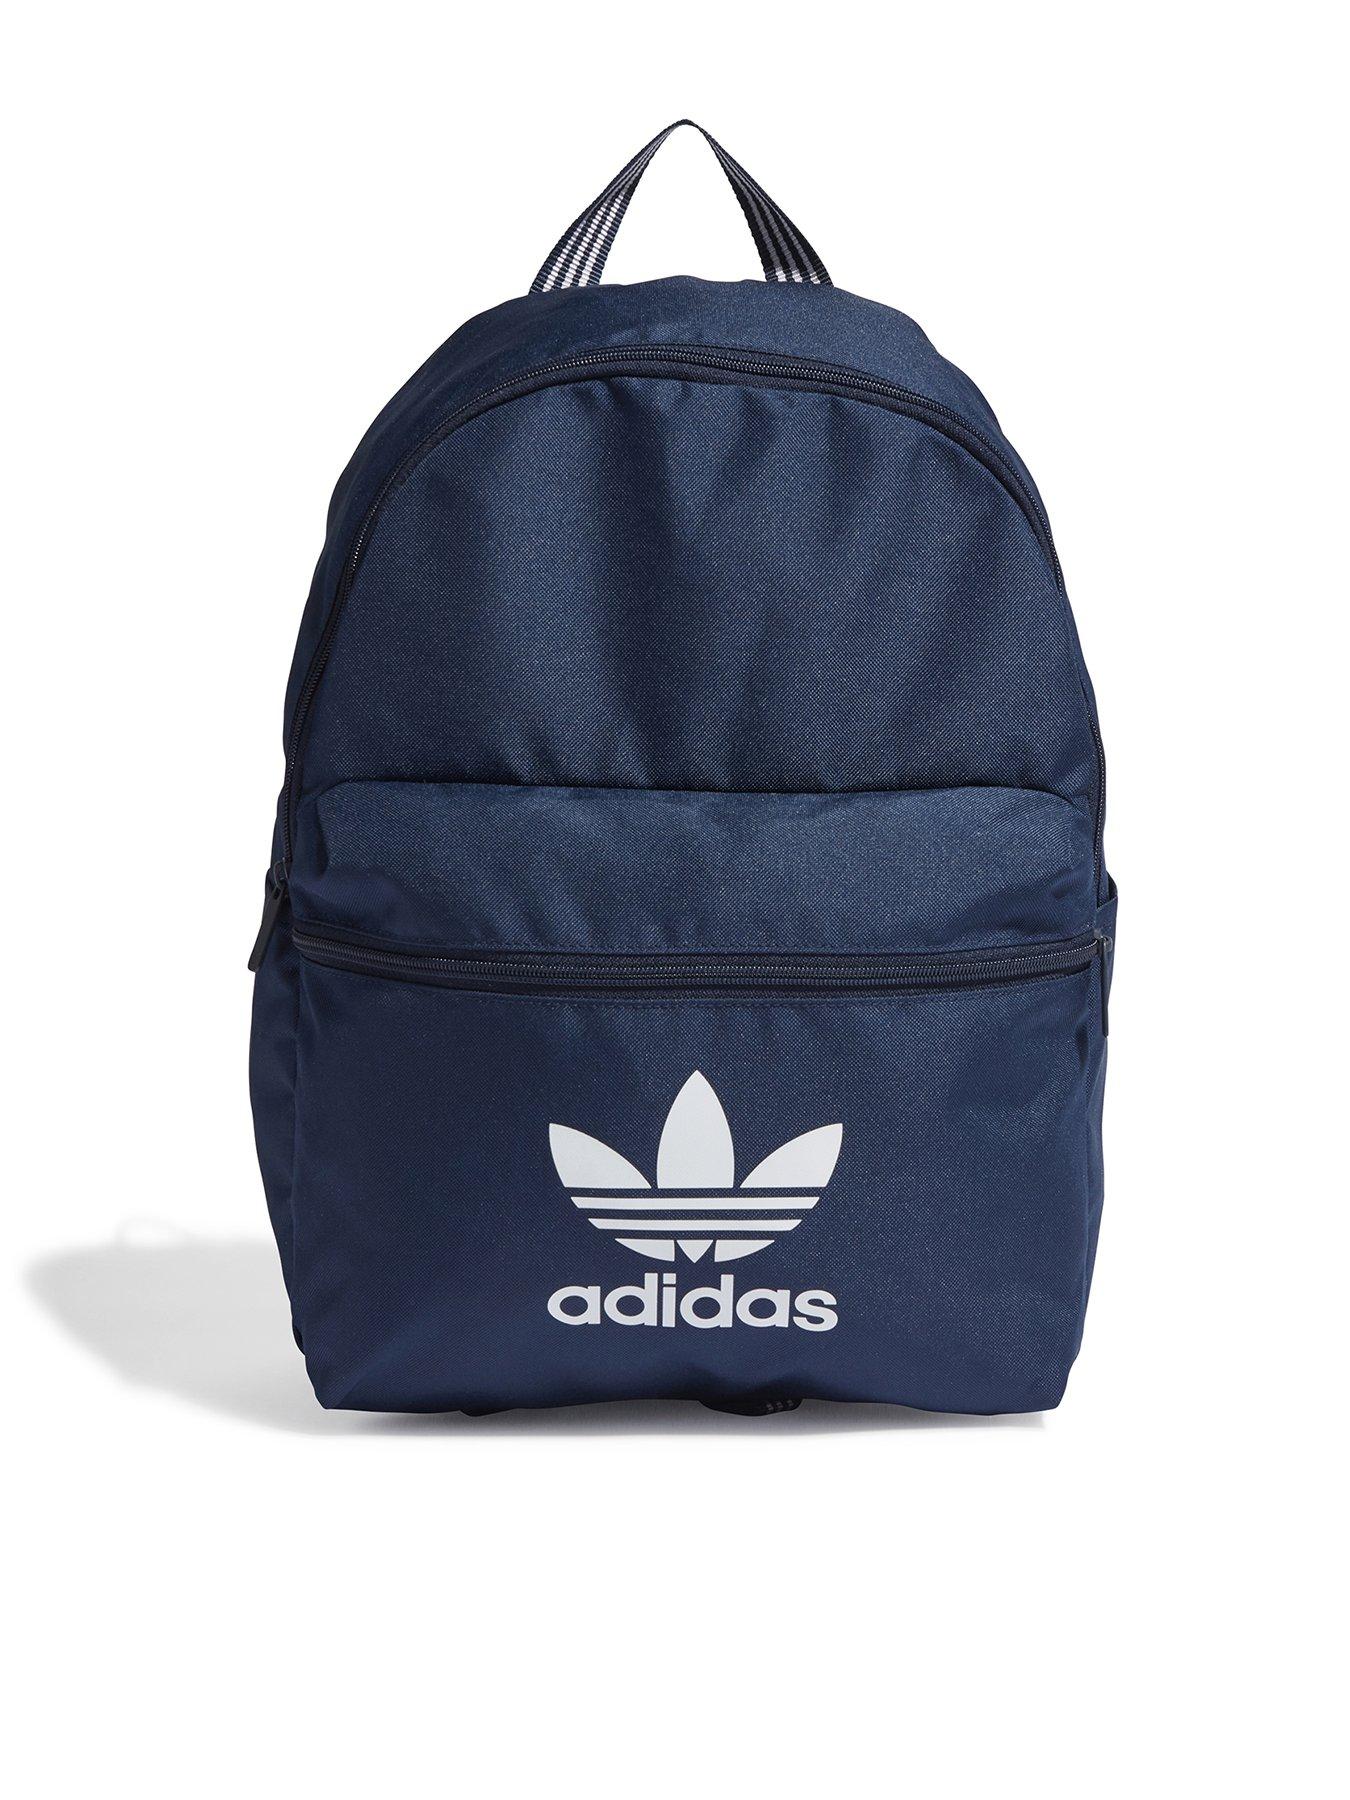 Adidas Originals Adicolor Backpack - Navy/White